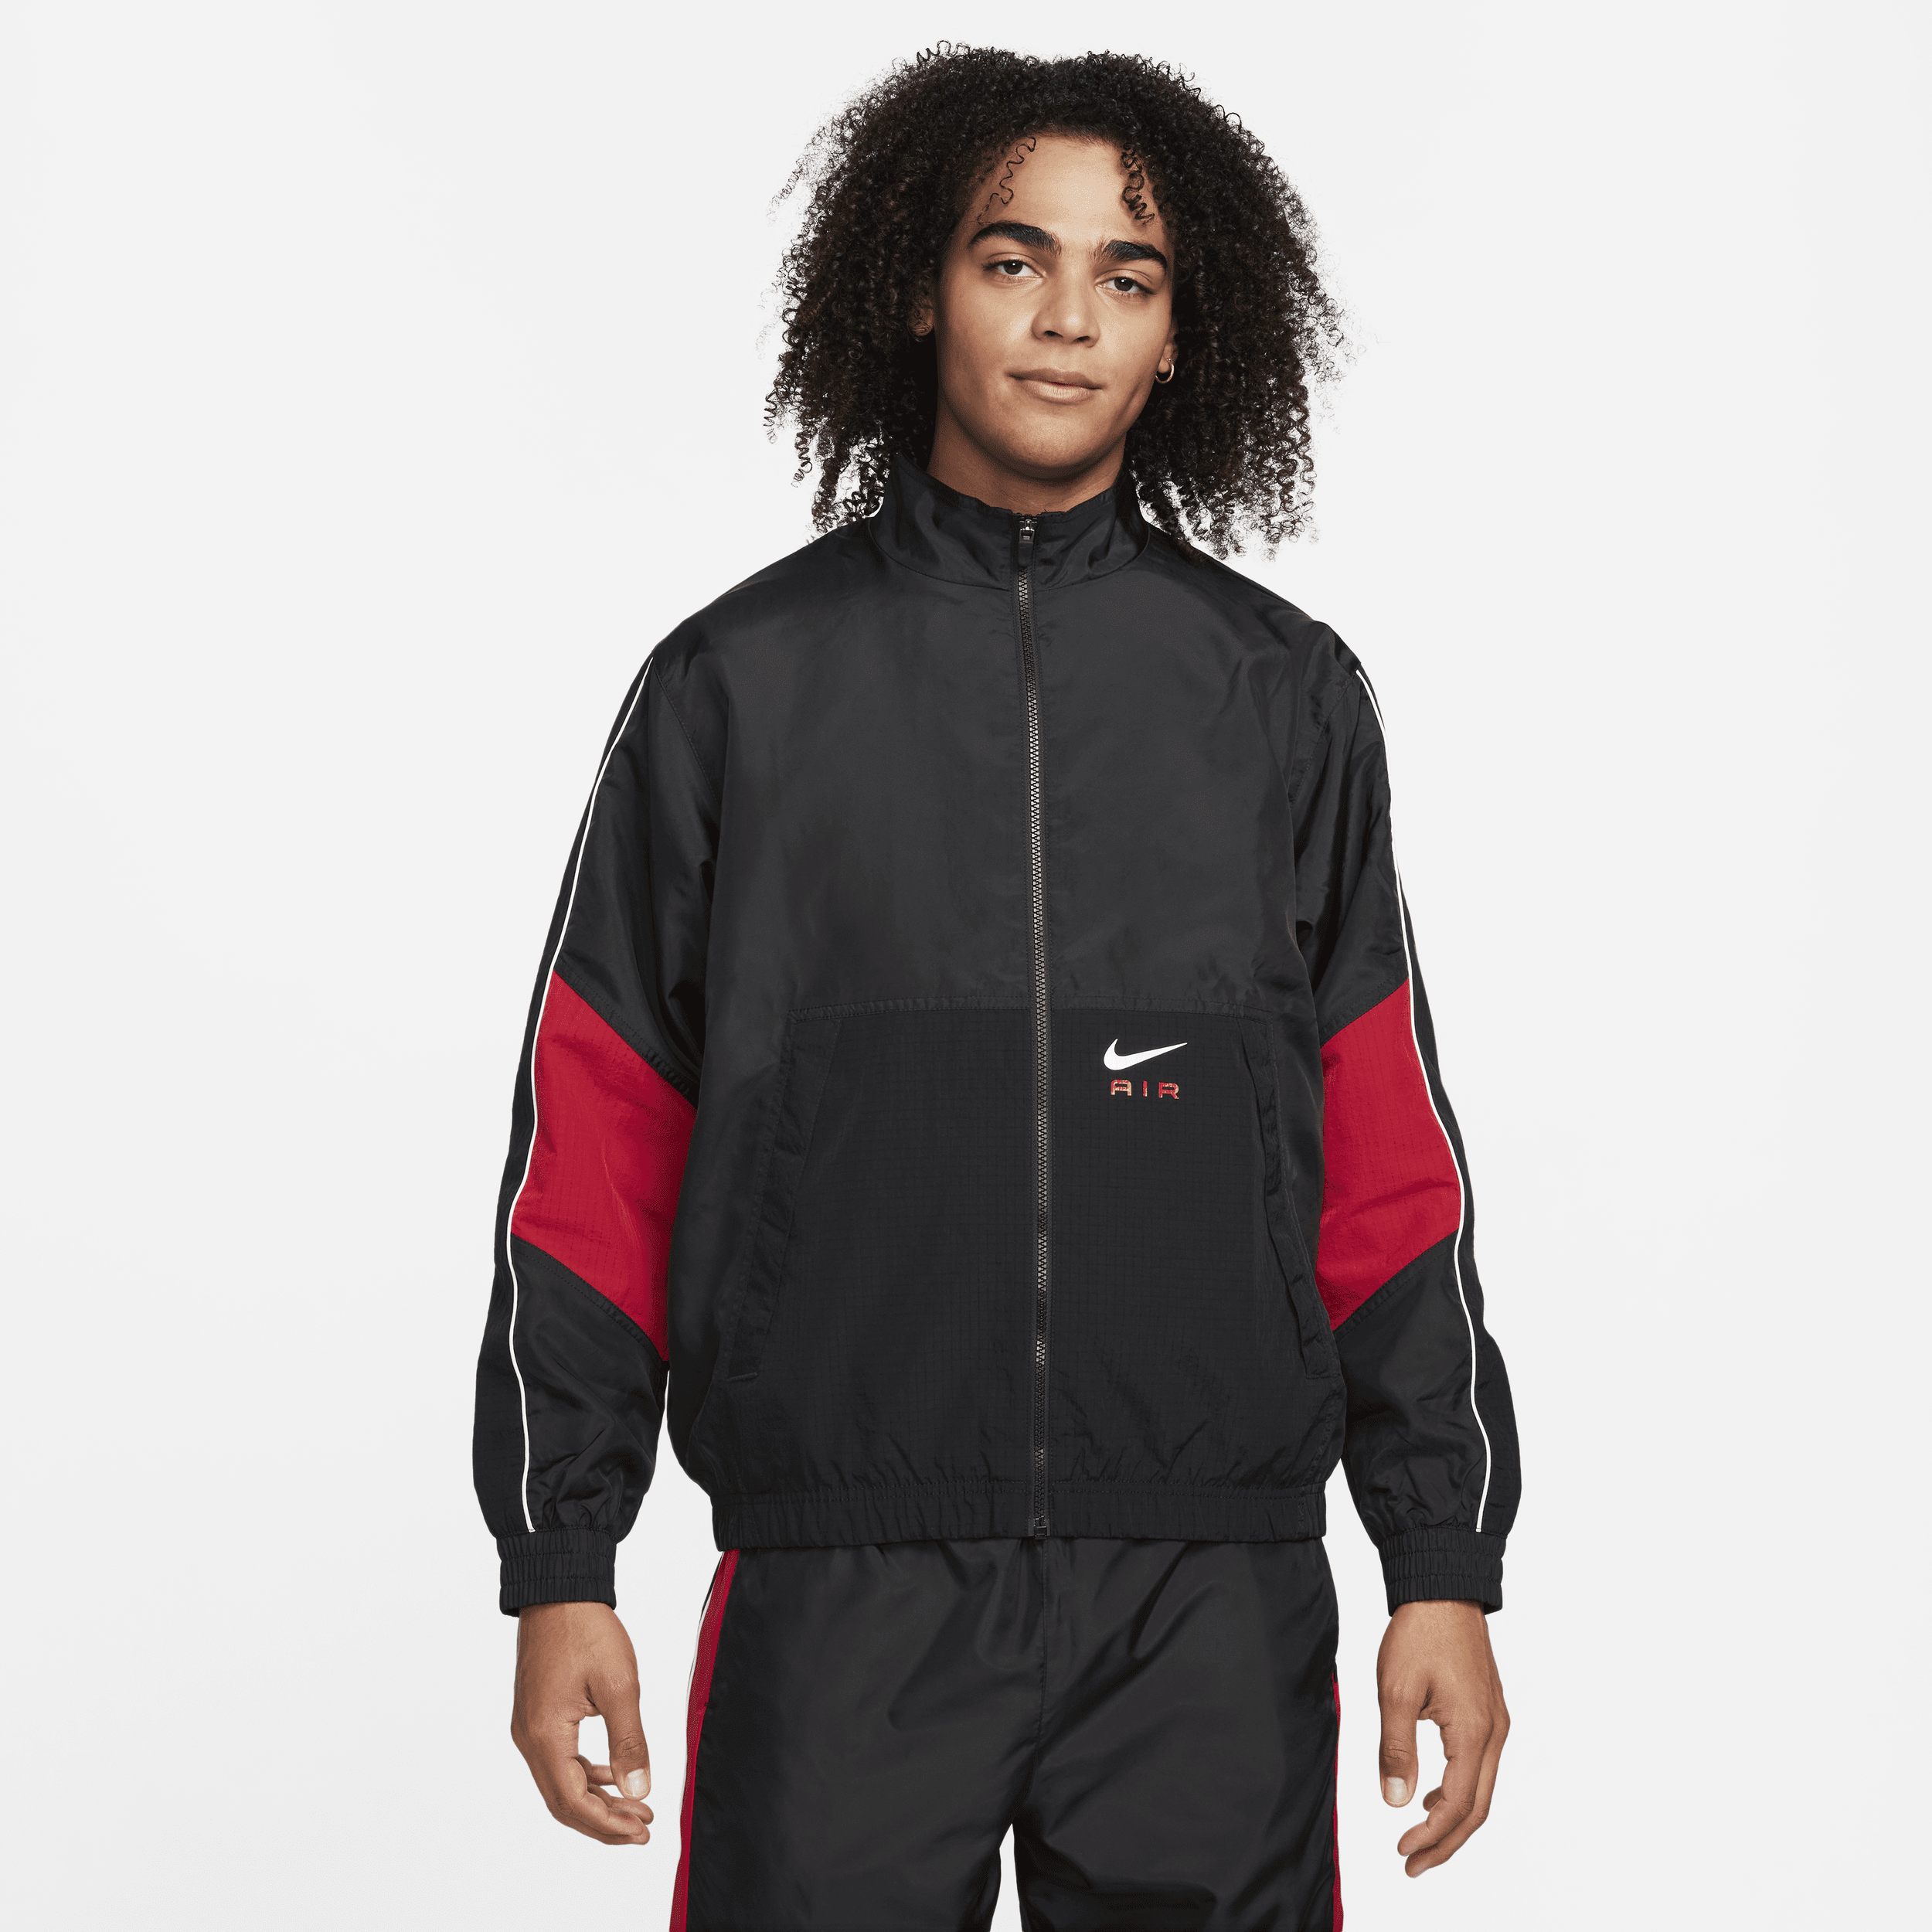 Nike Air geweven trainingsjack voor heren - Zwart